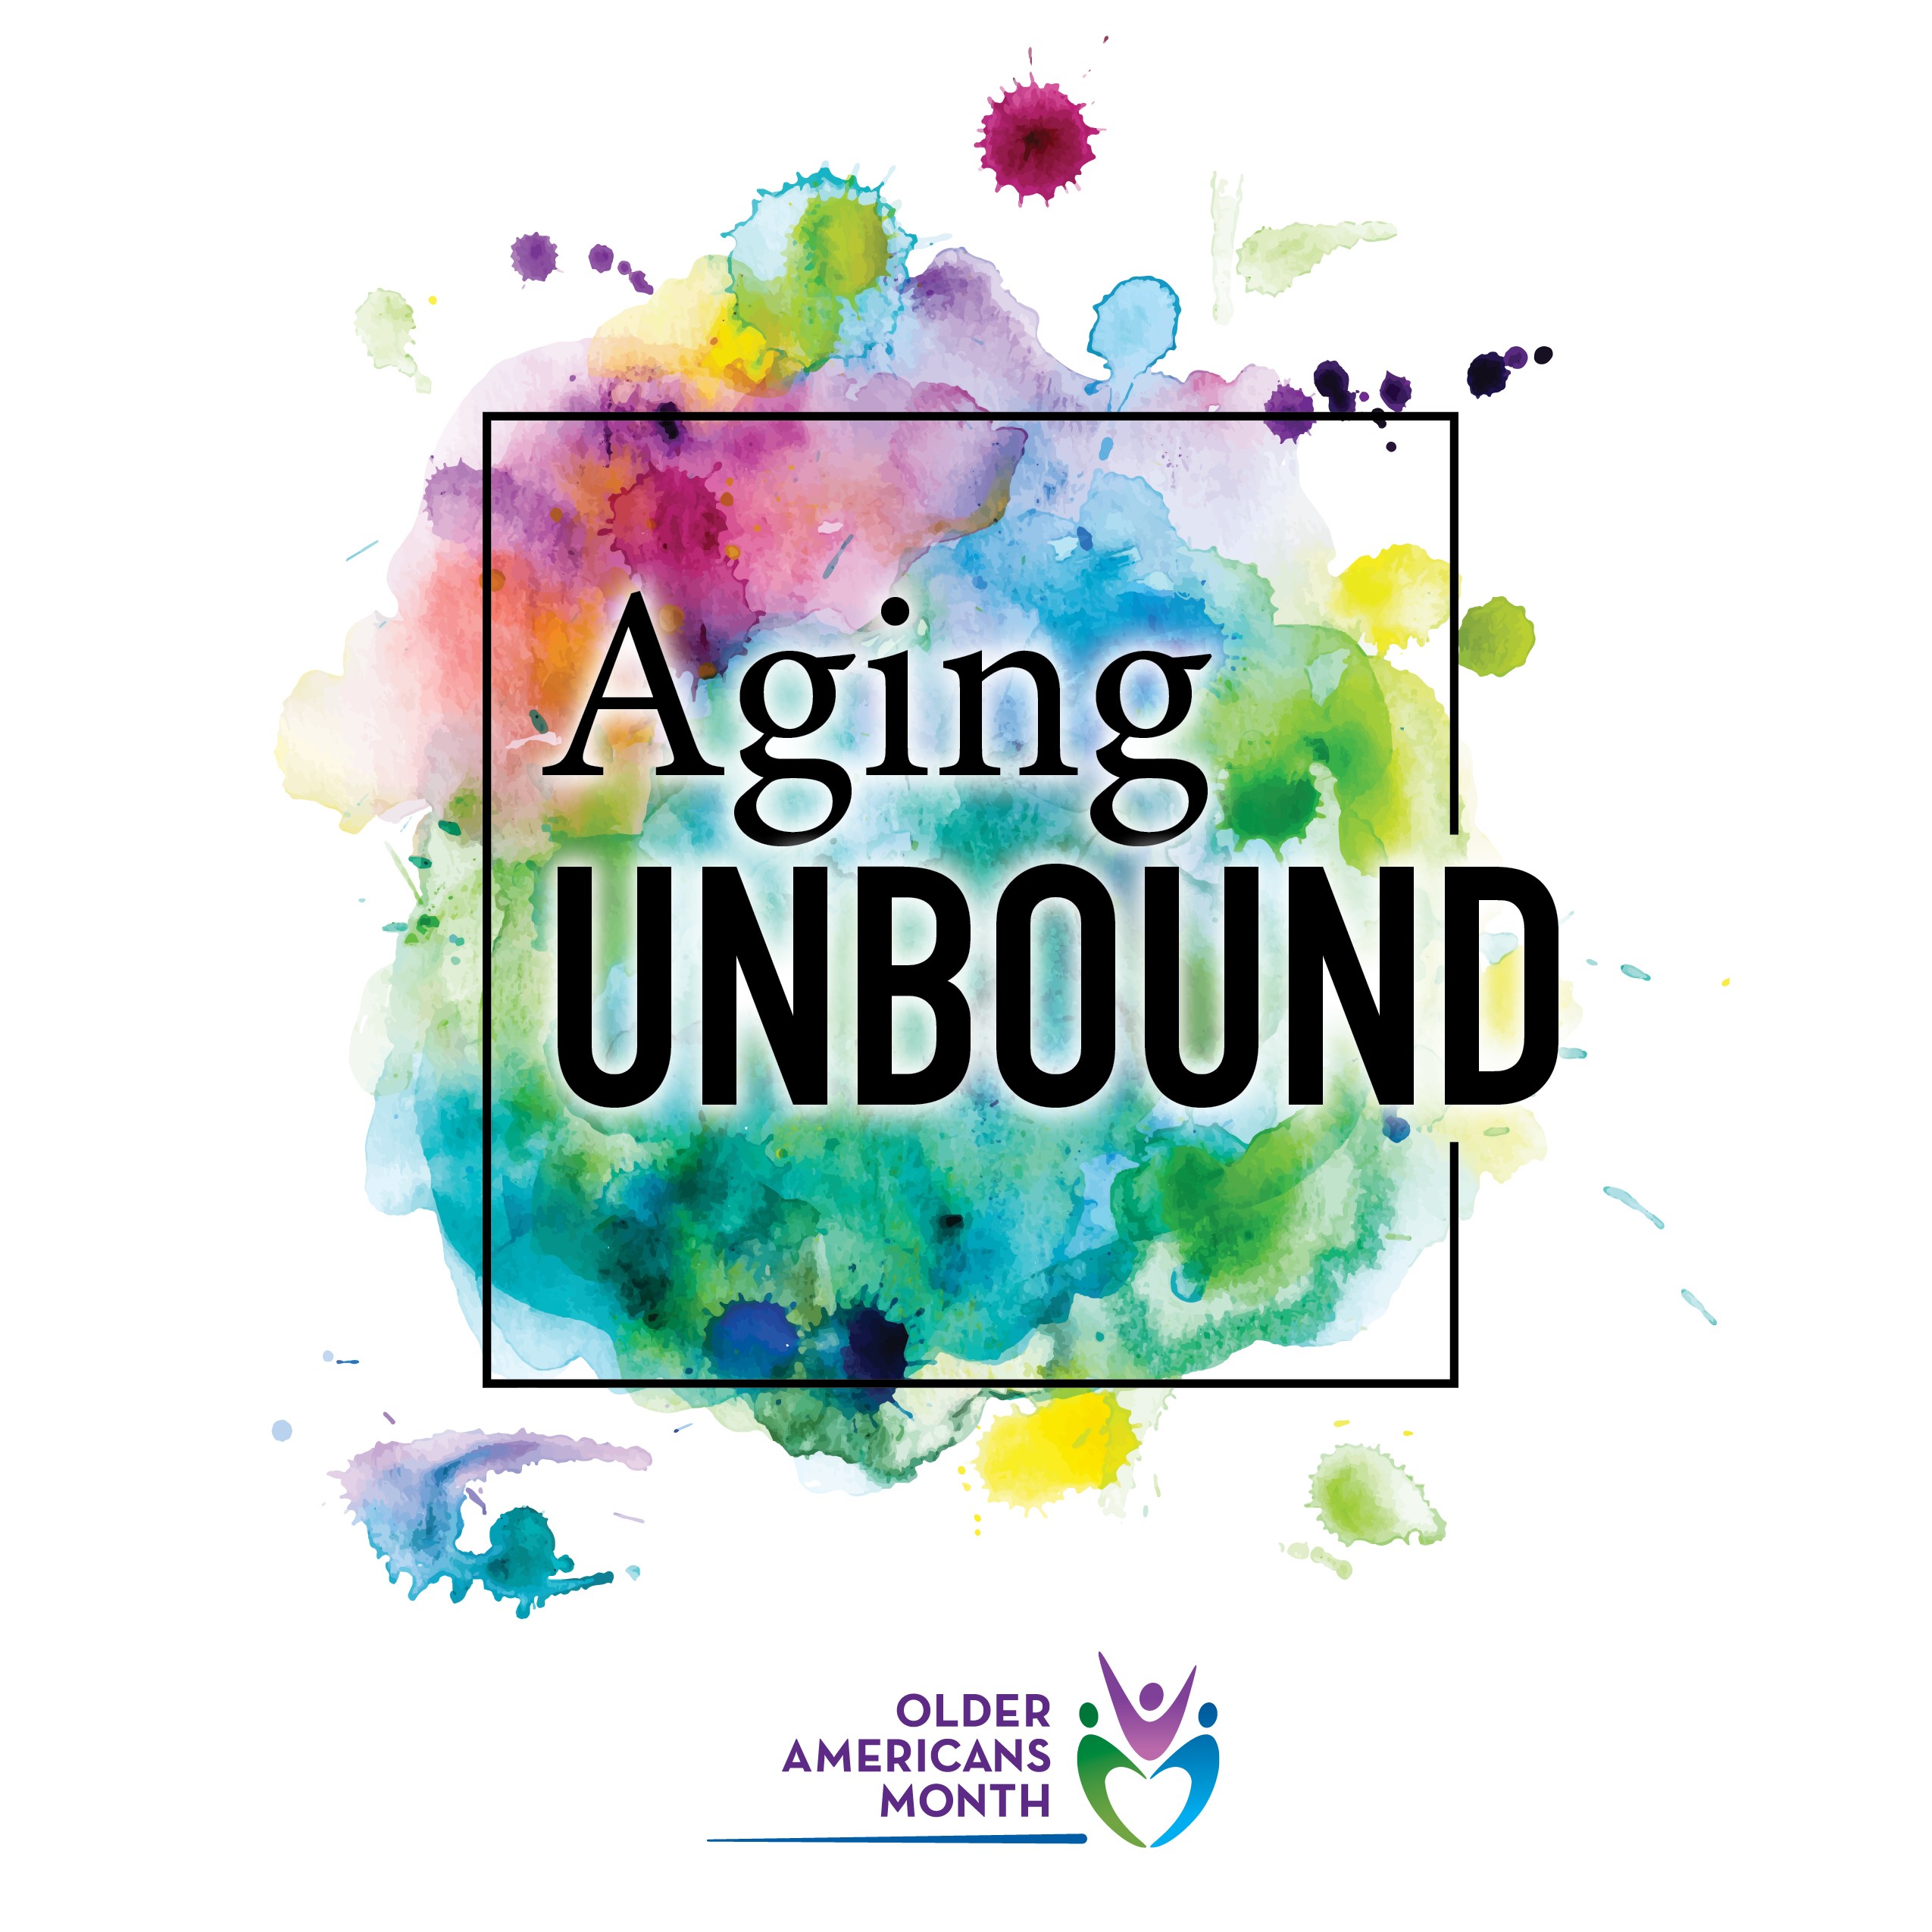 Aging Unbound. Older Americans Month.